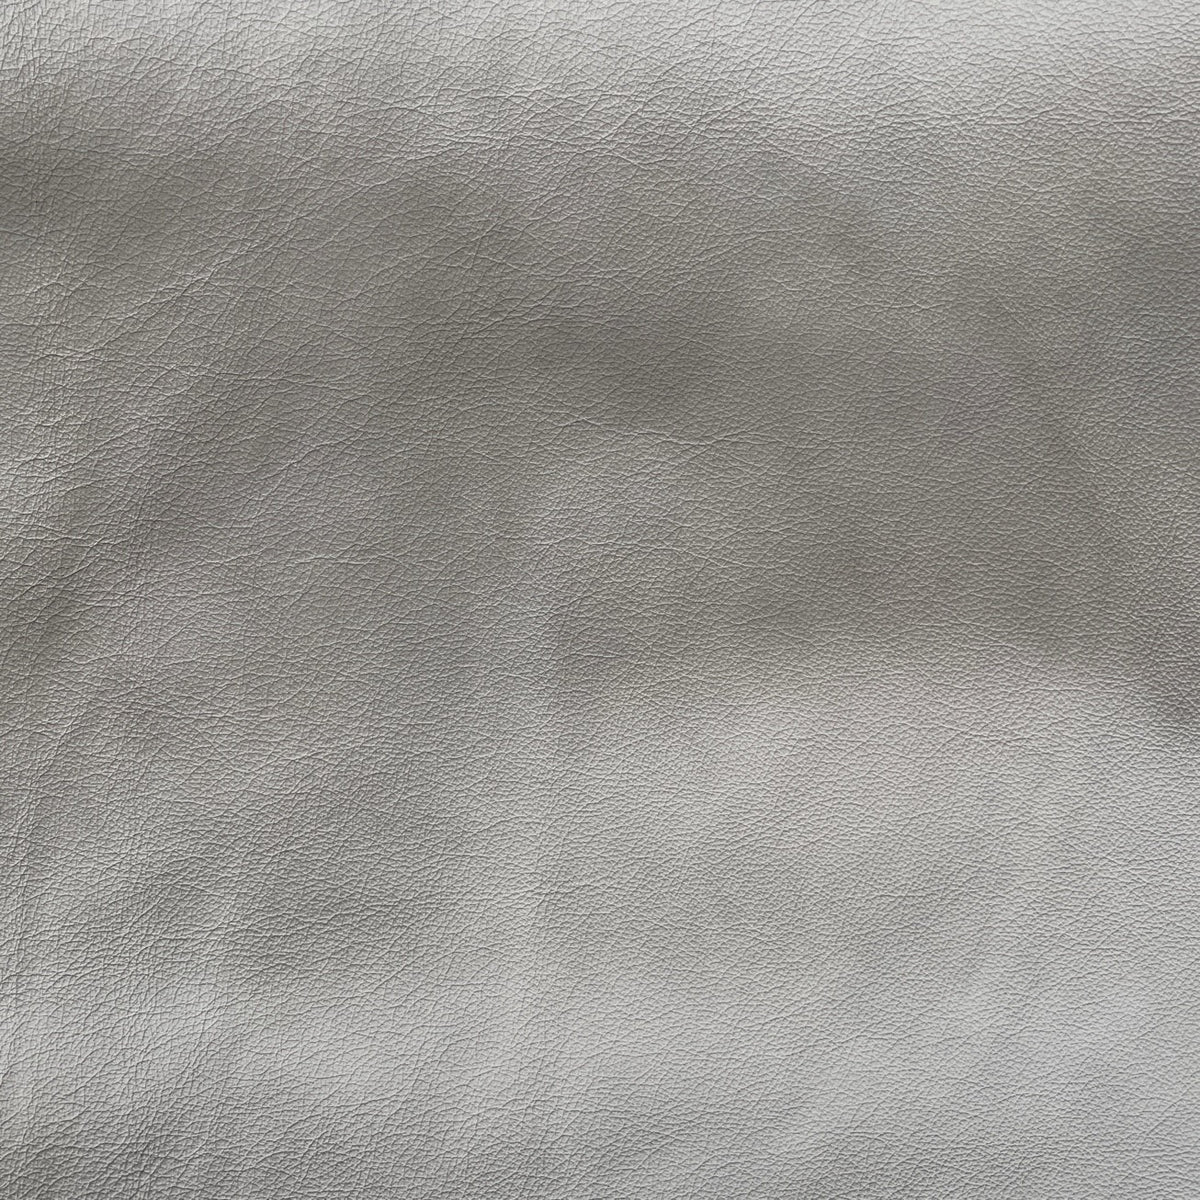 Upholstery Cow Hide #28b | Grey | 1.0mm | 58 sq.ft | $405 ea.